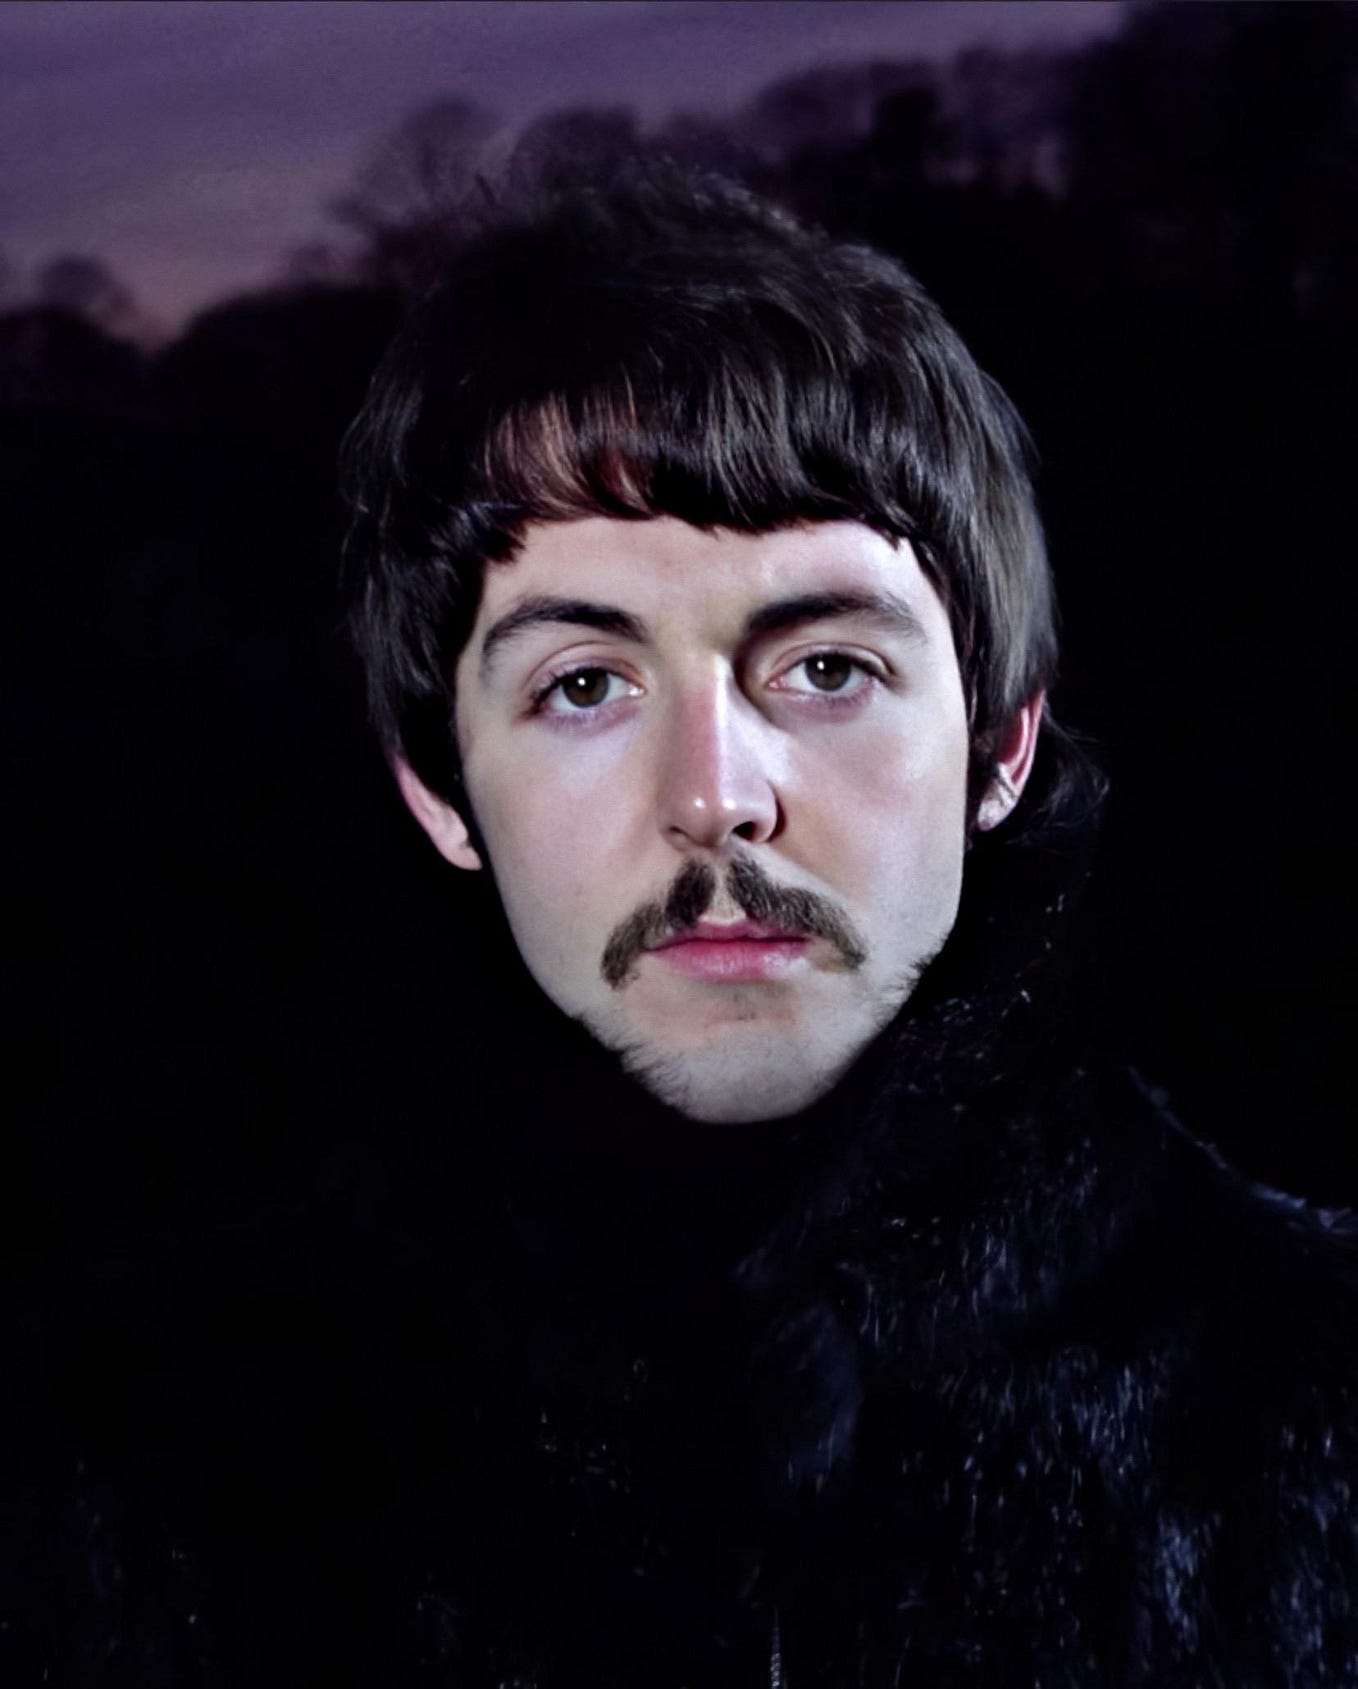 Who Stole McCartney’s Cocaine?